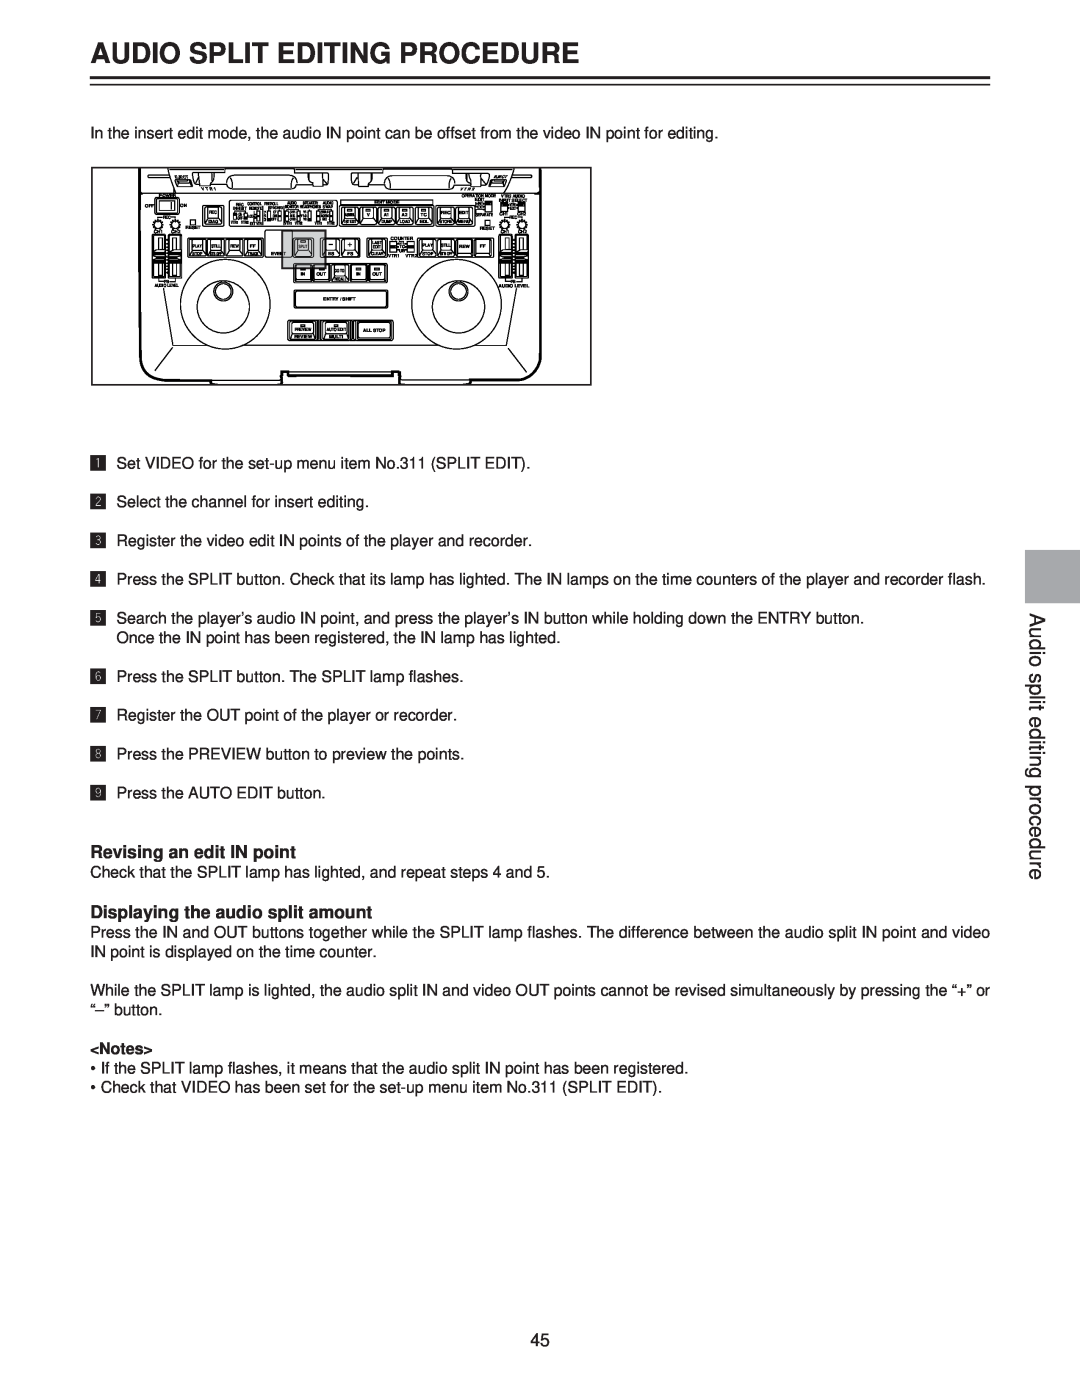 Panasonic AJ-LT85P manual Audio Split Editing Procedure, Audio split editing procedure, Revising an edit IN point 